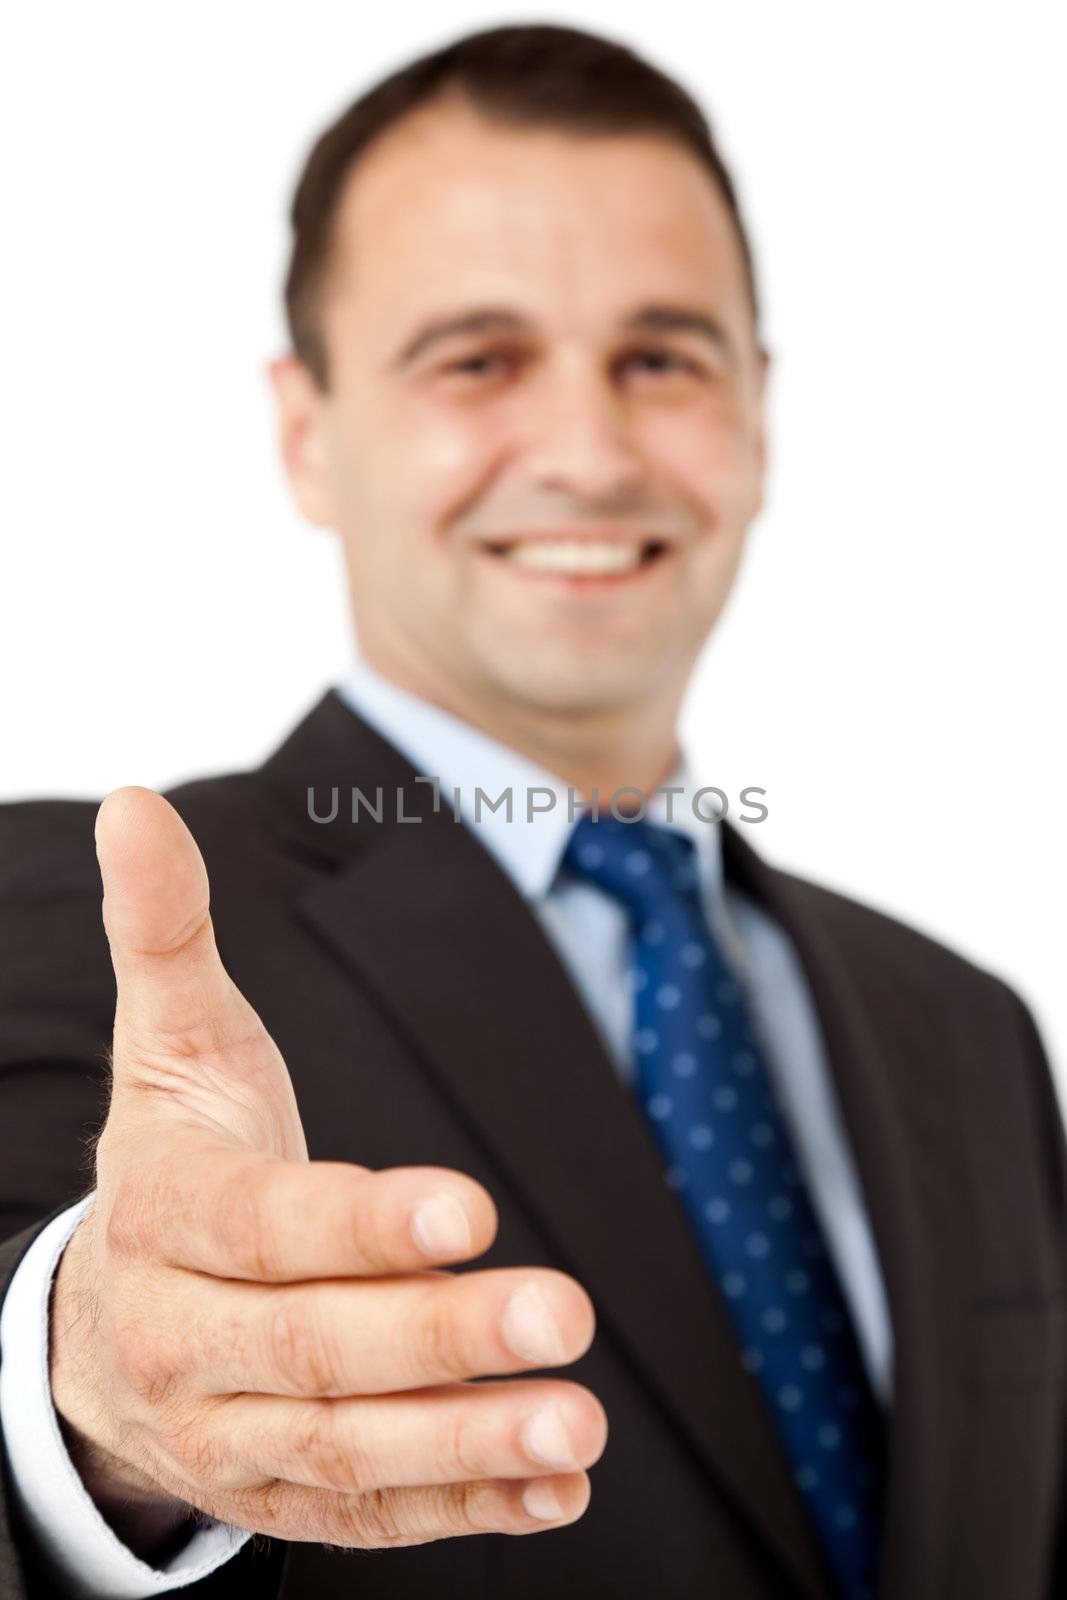 Smiling businessman offering handshake, selective focus on hand